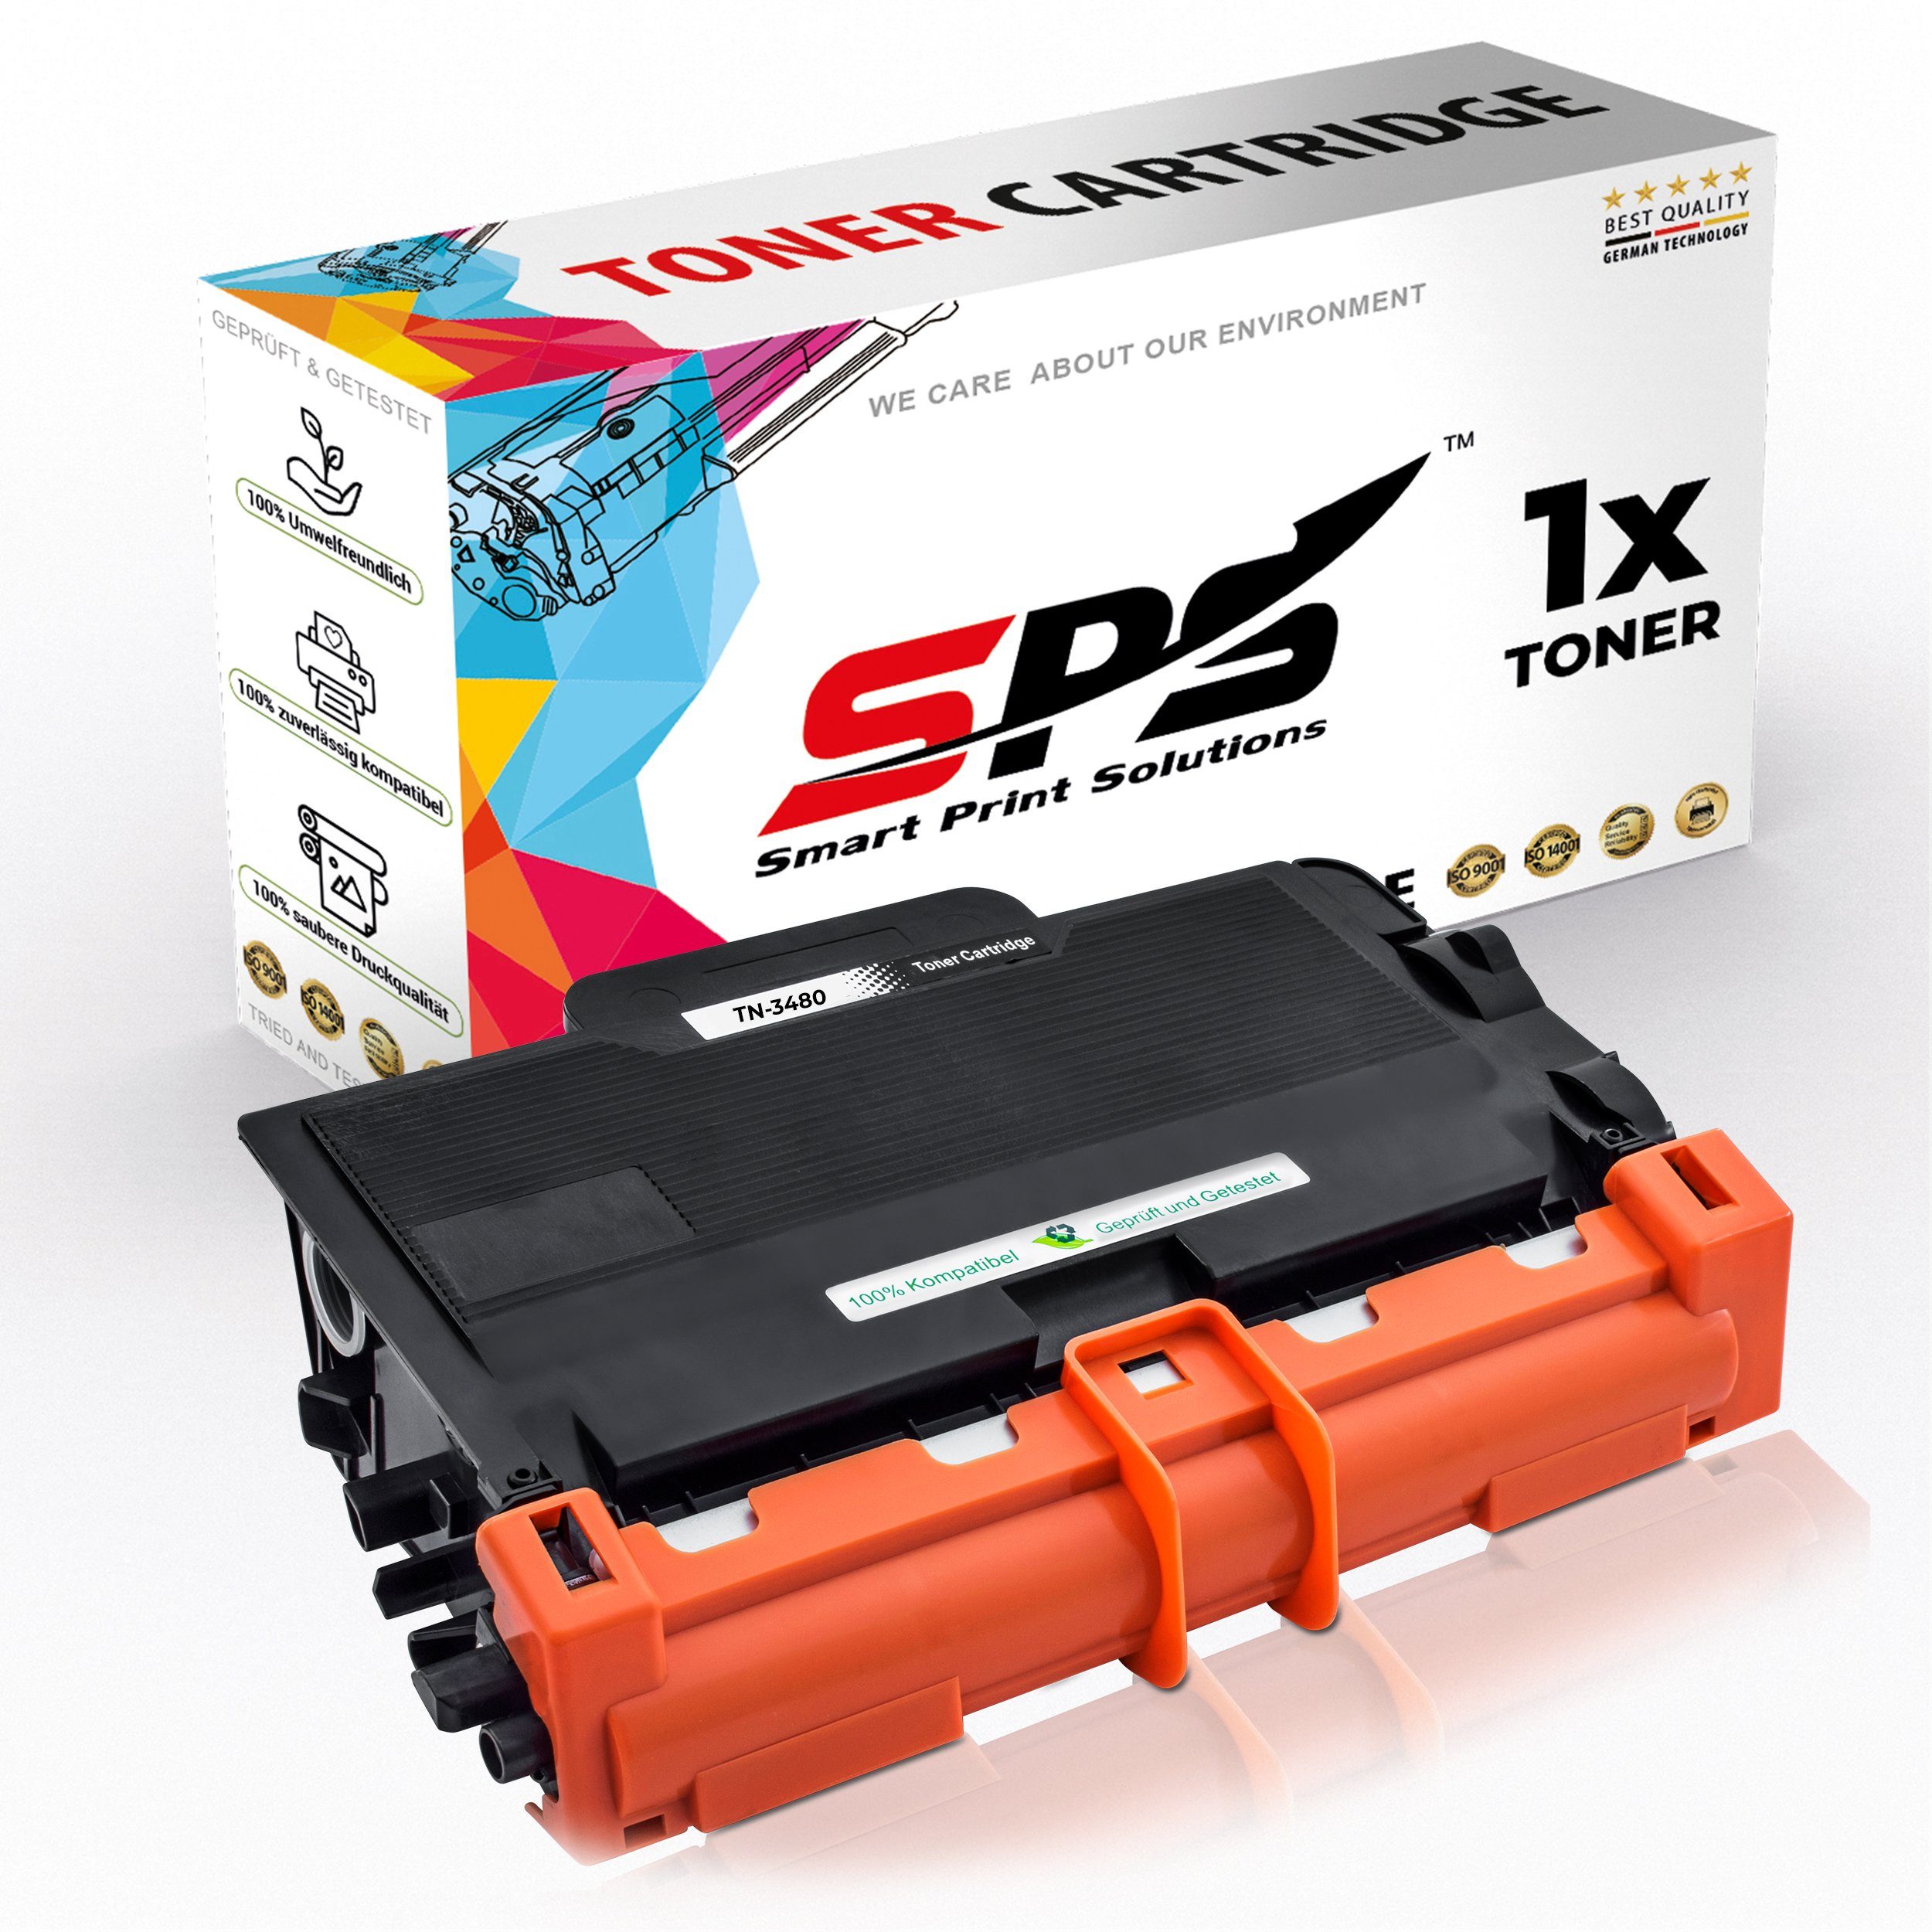 SPS Pack) (1er TN-3430, für Kompatibel Tonerkartusche Brother DCP-L5502DN